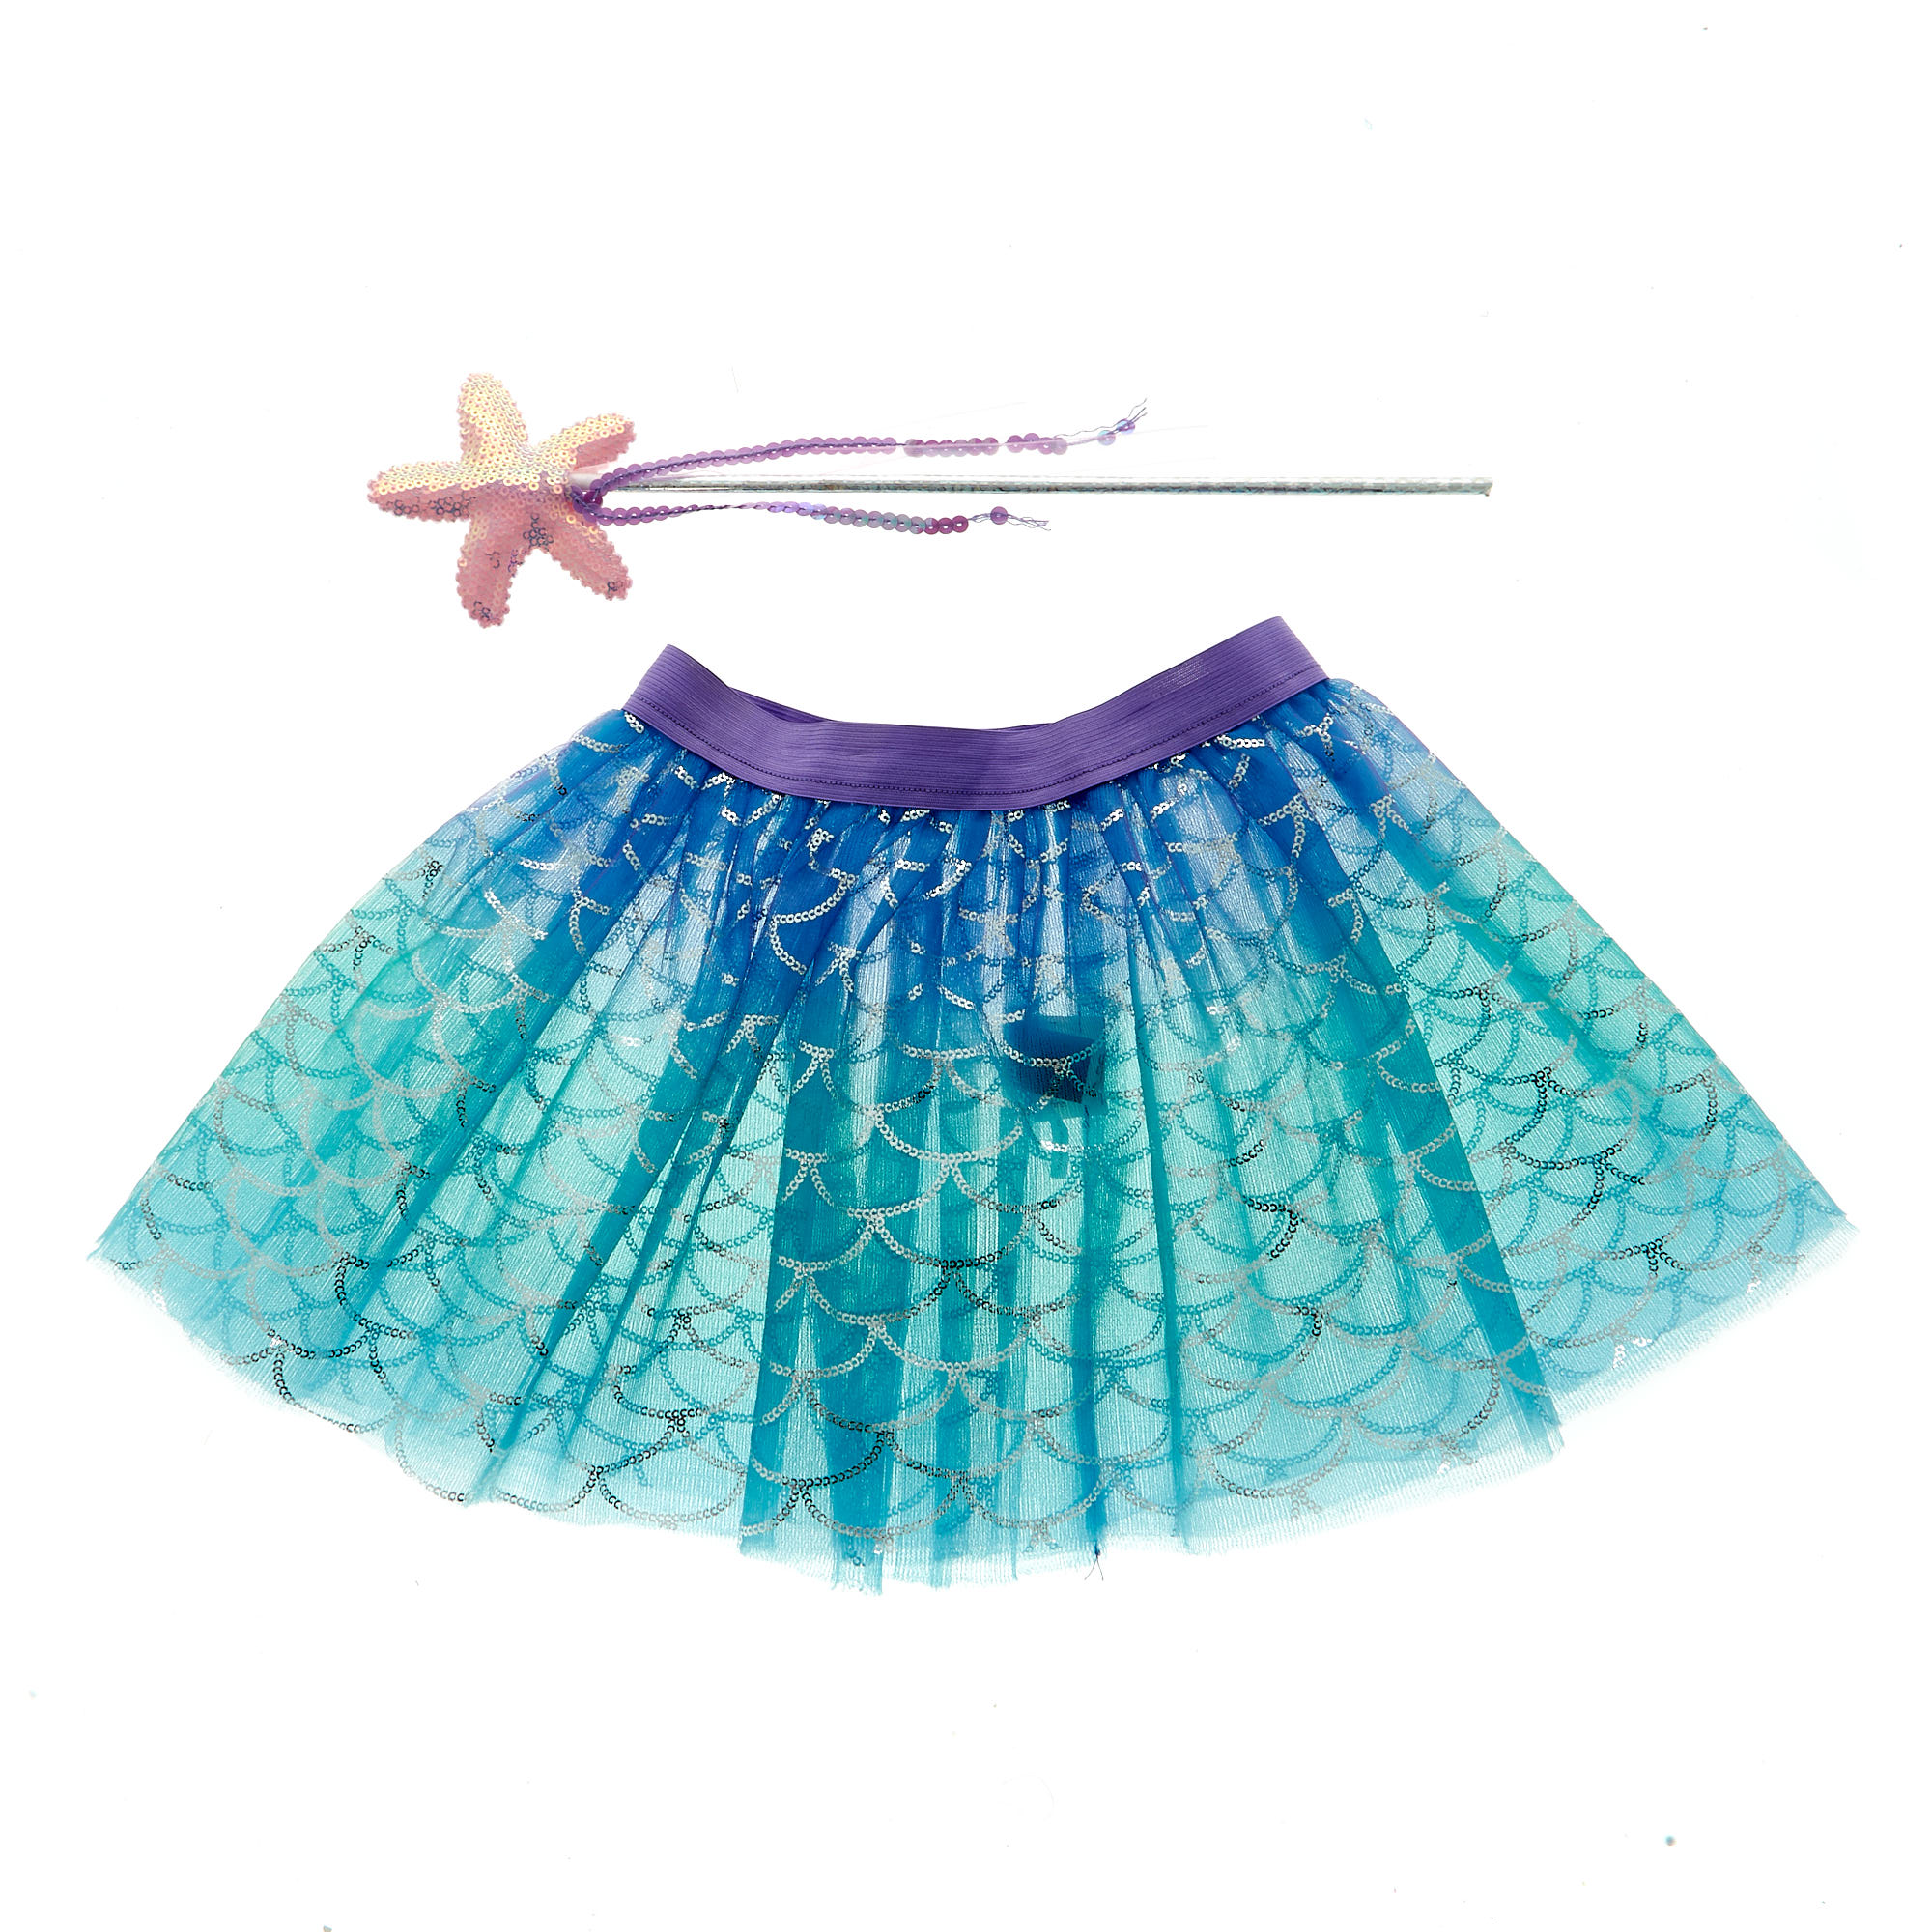 Buy Mermaid Skirt & Wand for GBP 3.99 | Card Factory UK